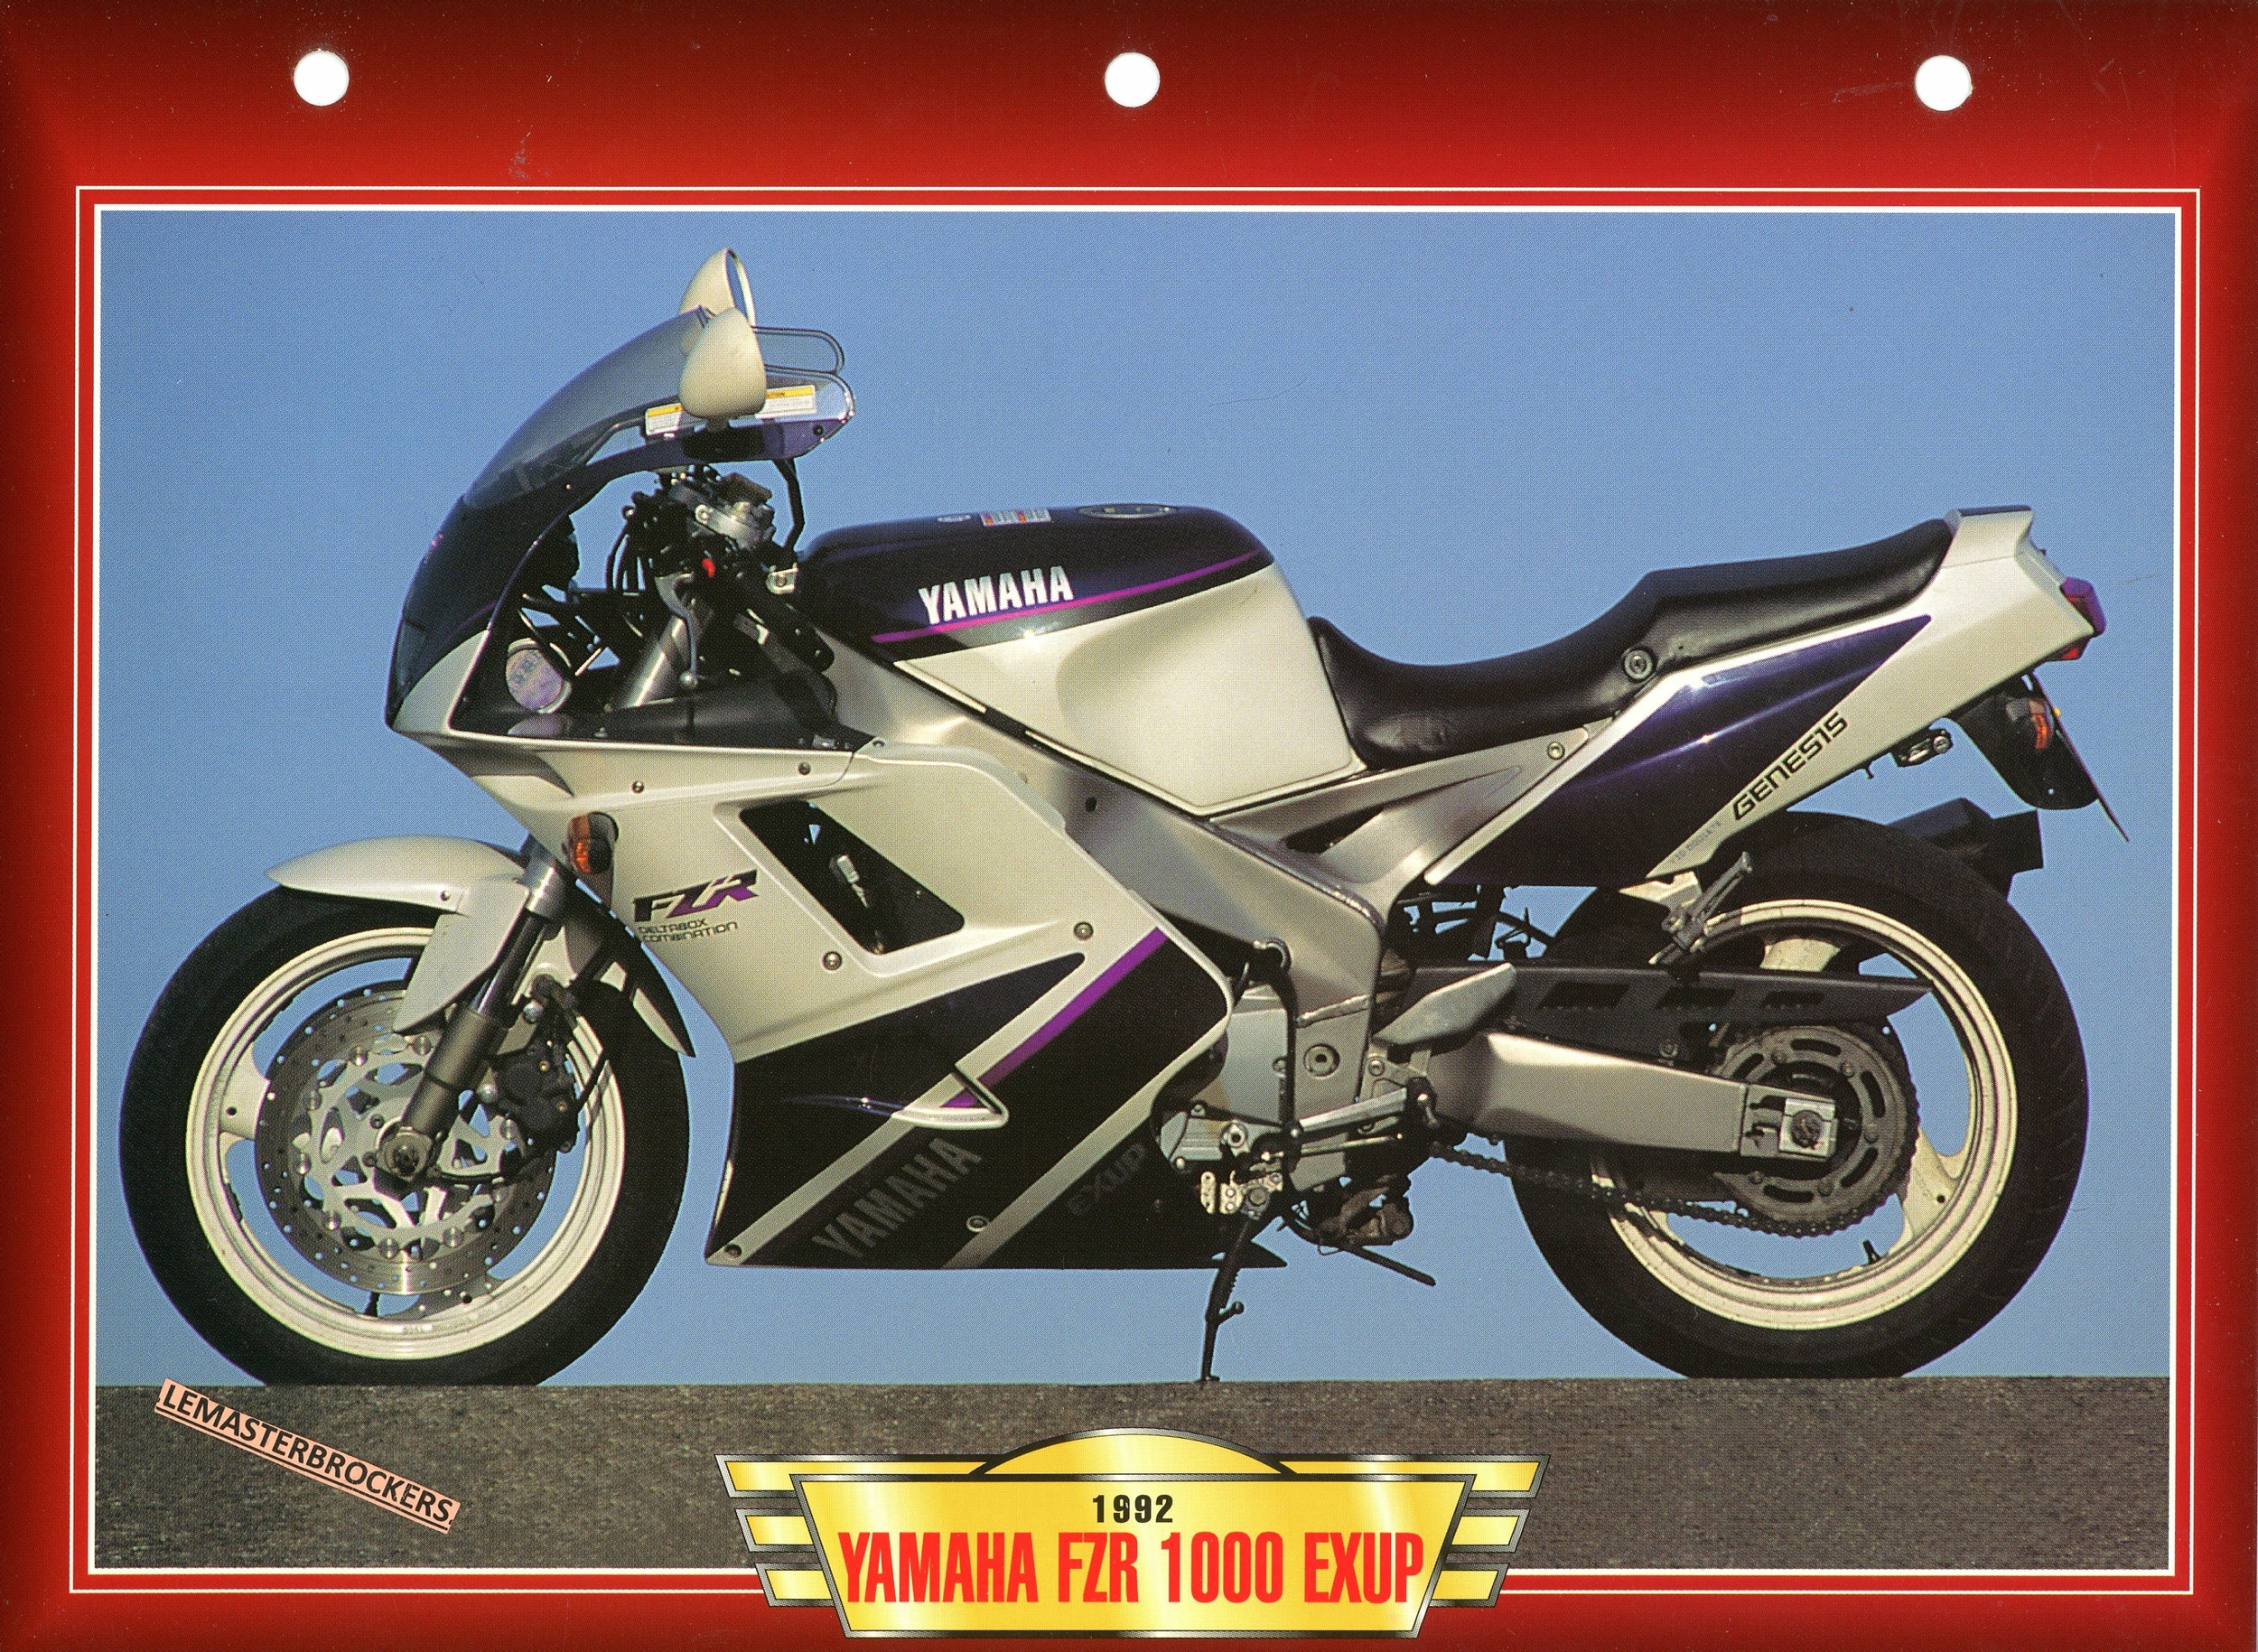 FICHE-MOTO-YAMAHA-FZR1000-lemasterbrockers-card-motorcycles-FZR